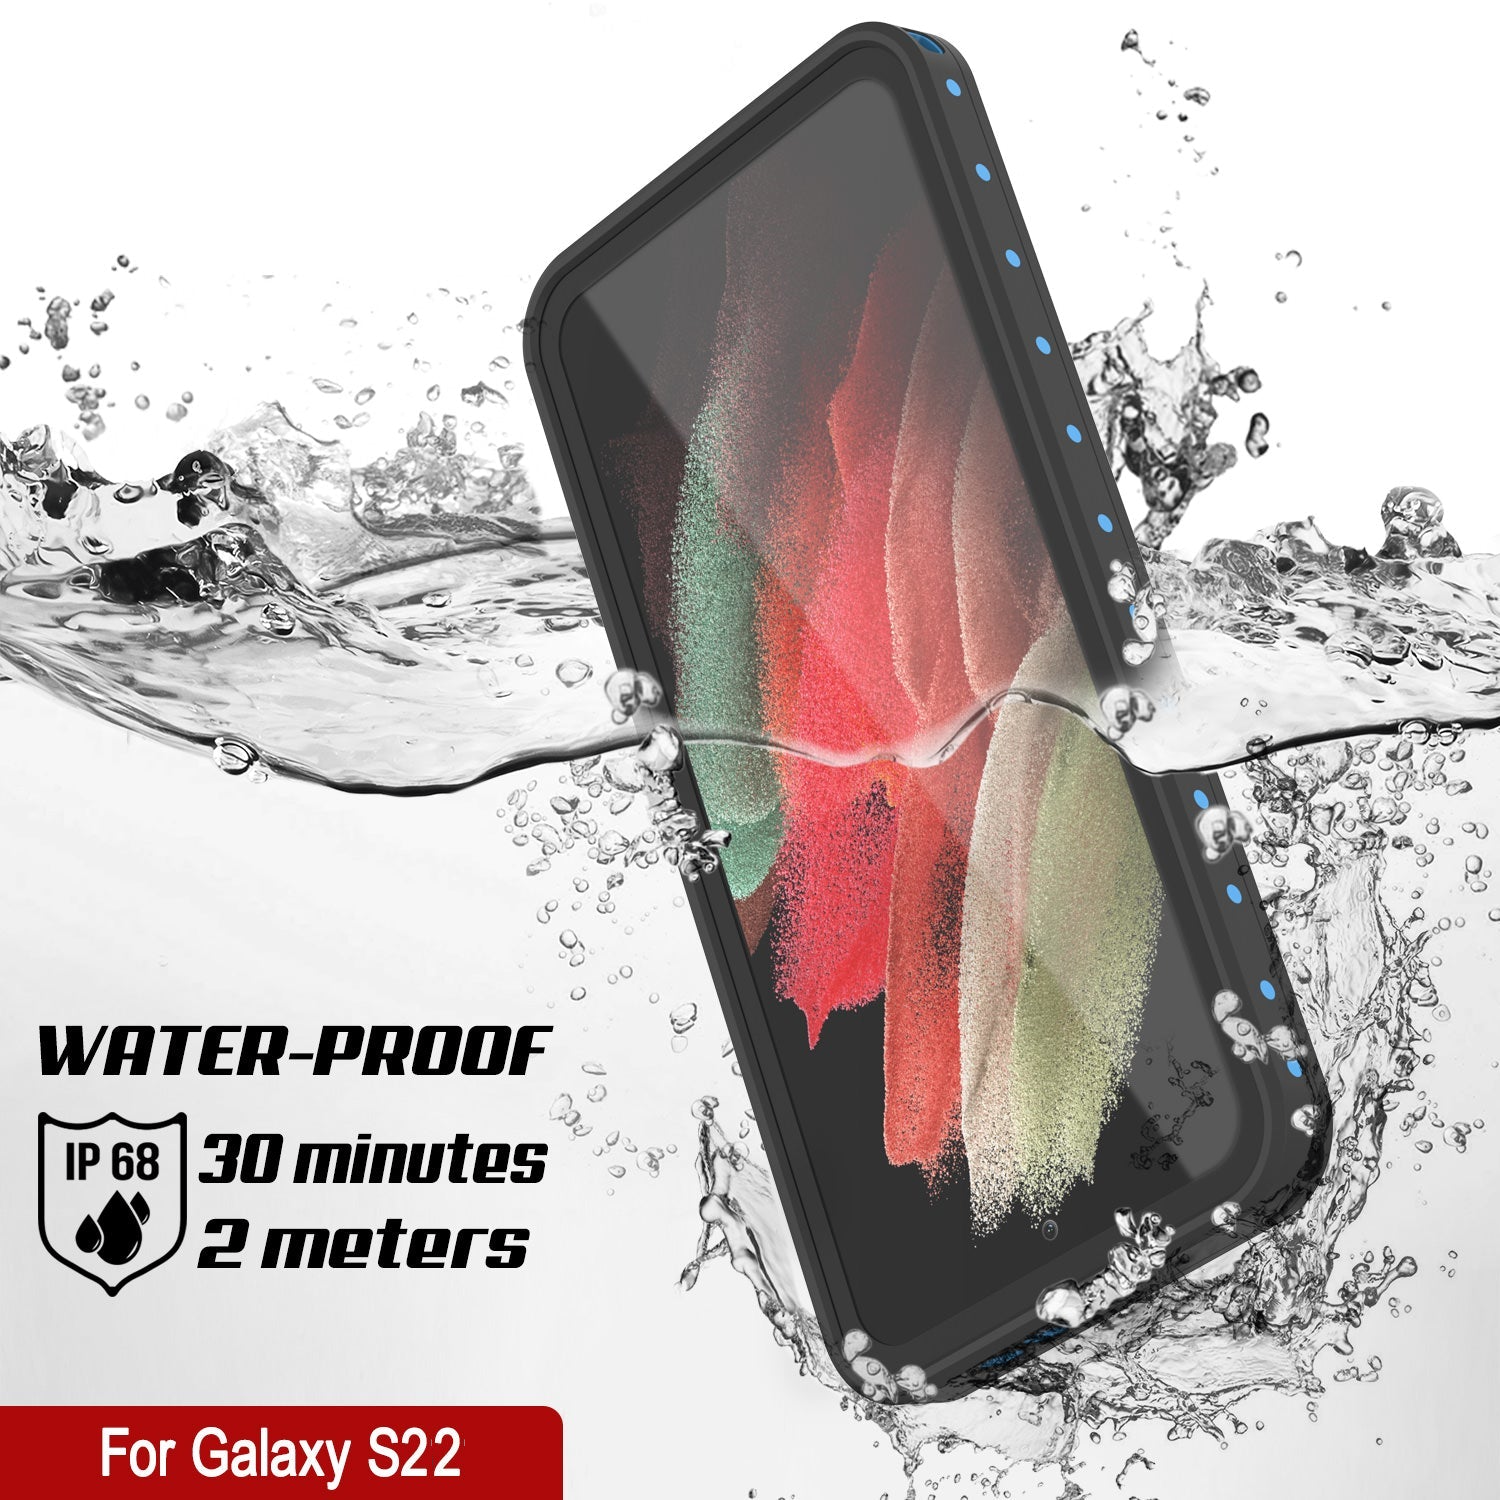 Galaxy S22 Waterproof Case PunkCase StudStar Light Blue Thin 6.6ft Underwater IP68 ShockProof